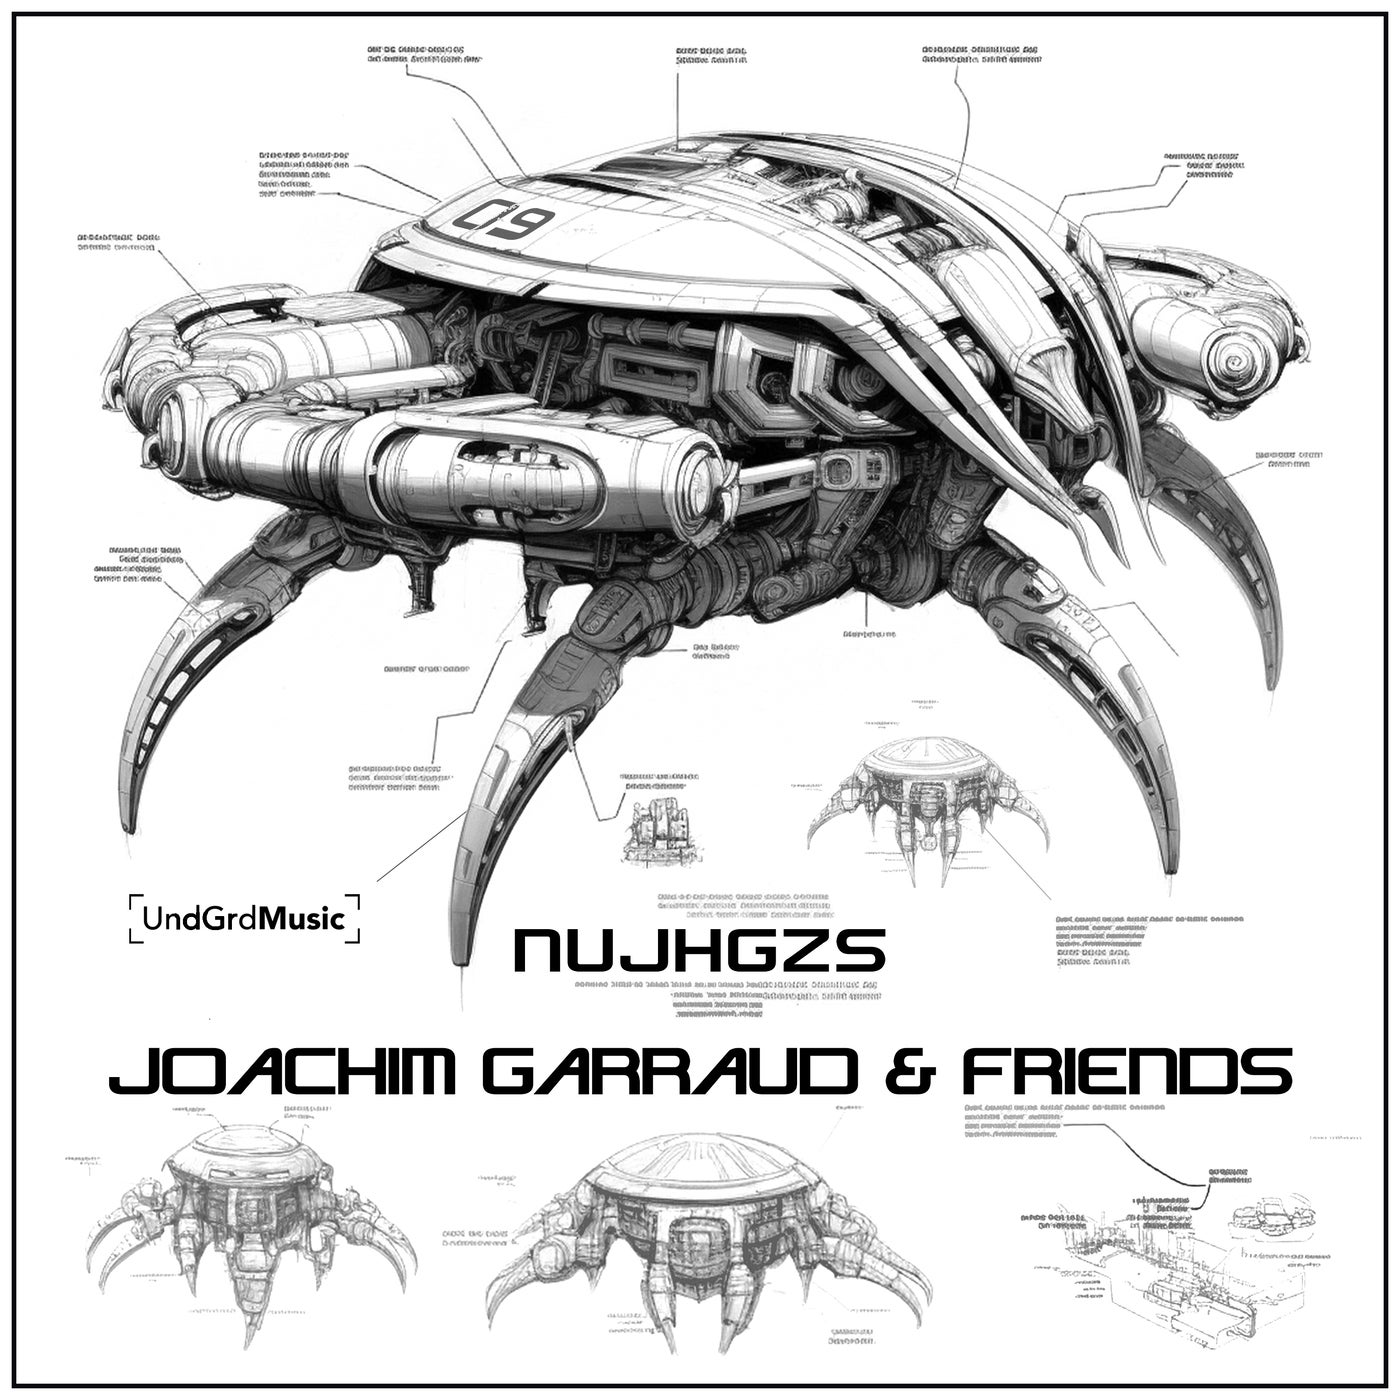 Joachim Garraud & Friends - NUJHGZS